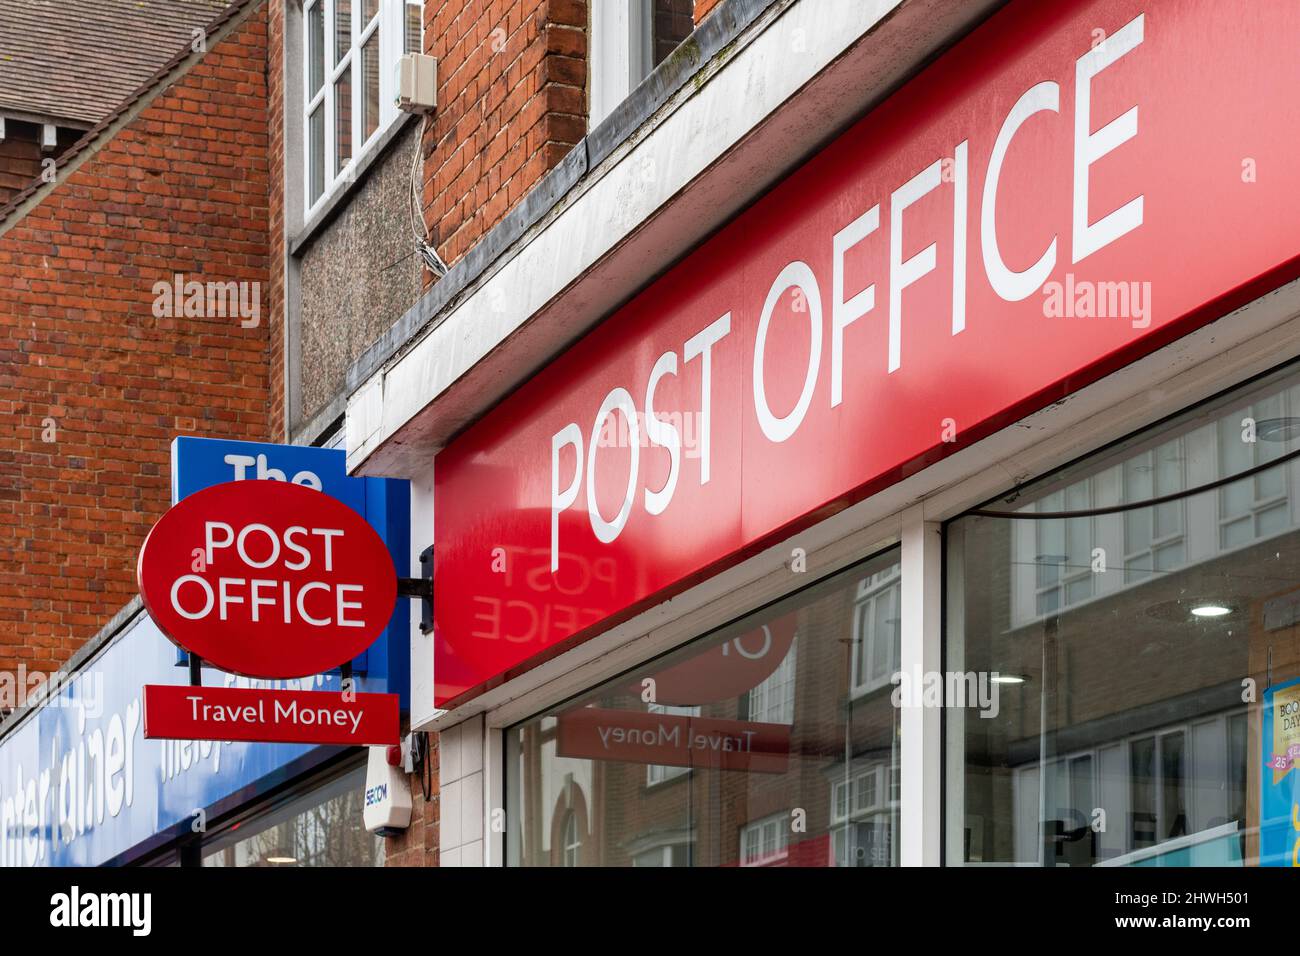 Post Office Travel Money sign, UK Stock Photo